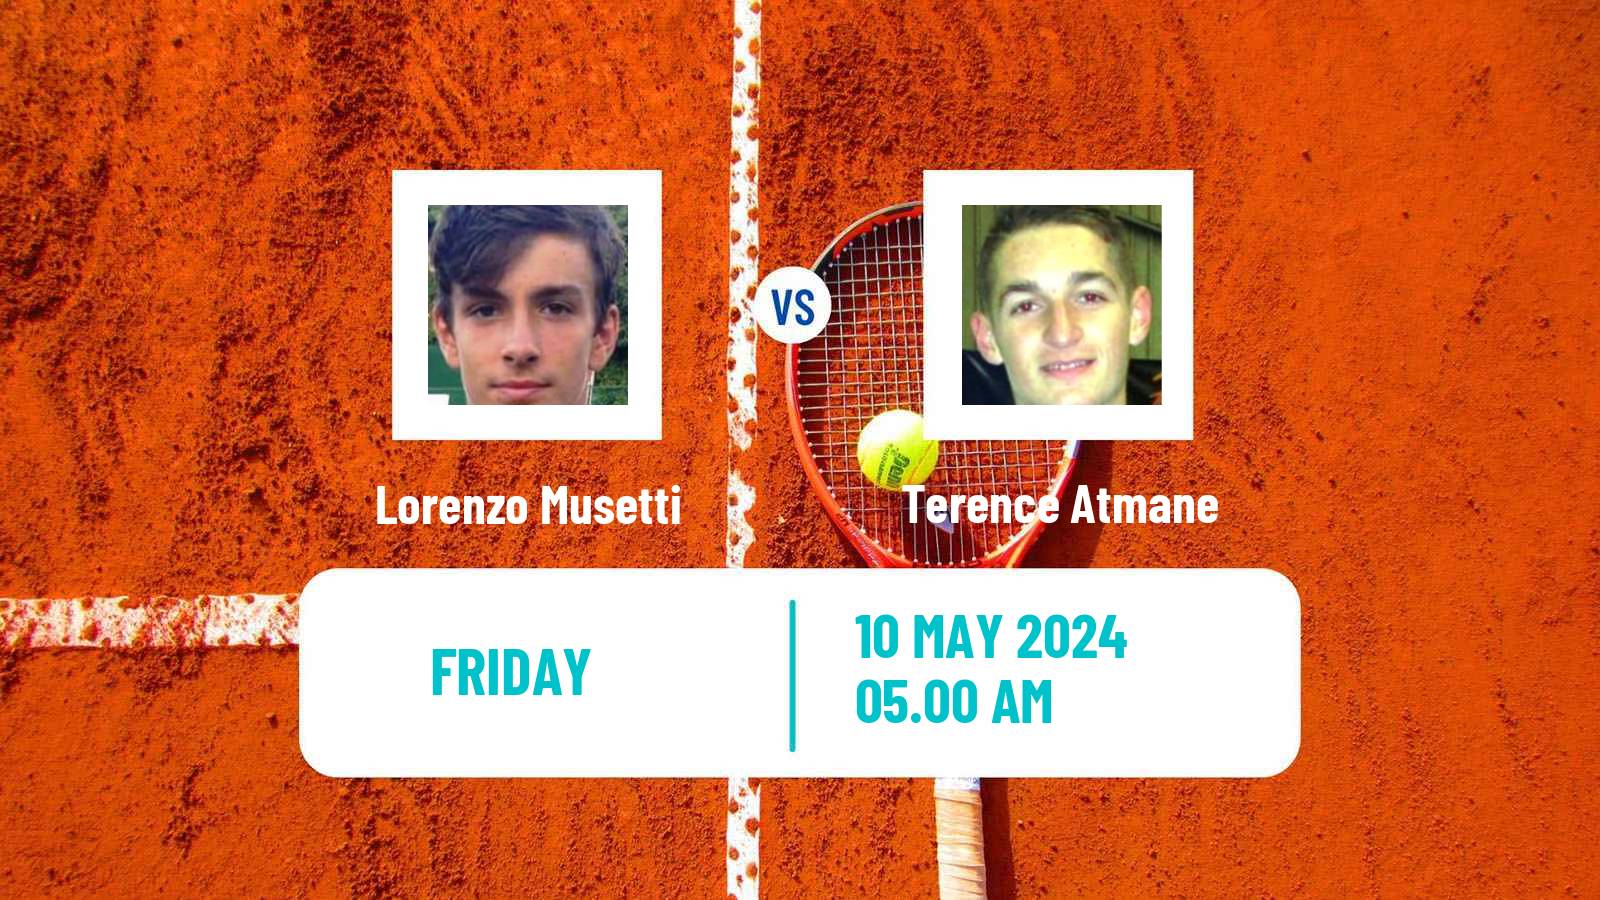 Tennis ATP Roma Lorenzo Musetti - Terence Atmane